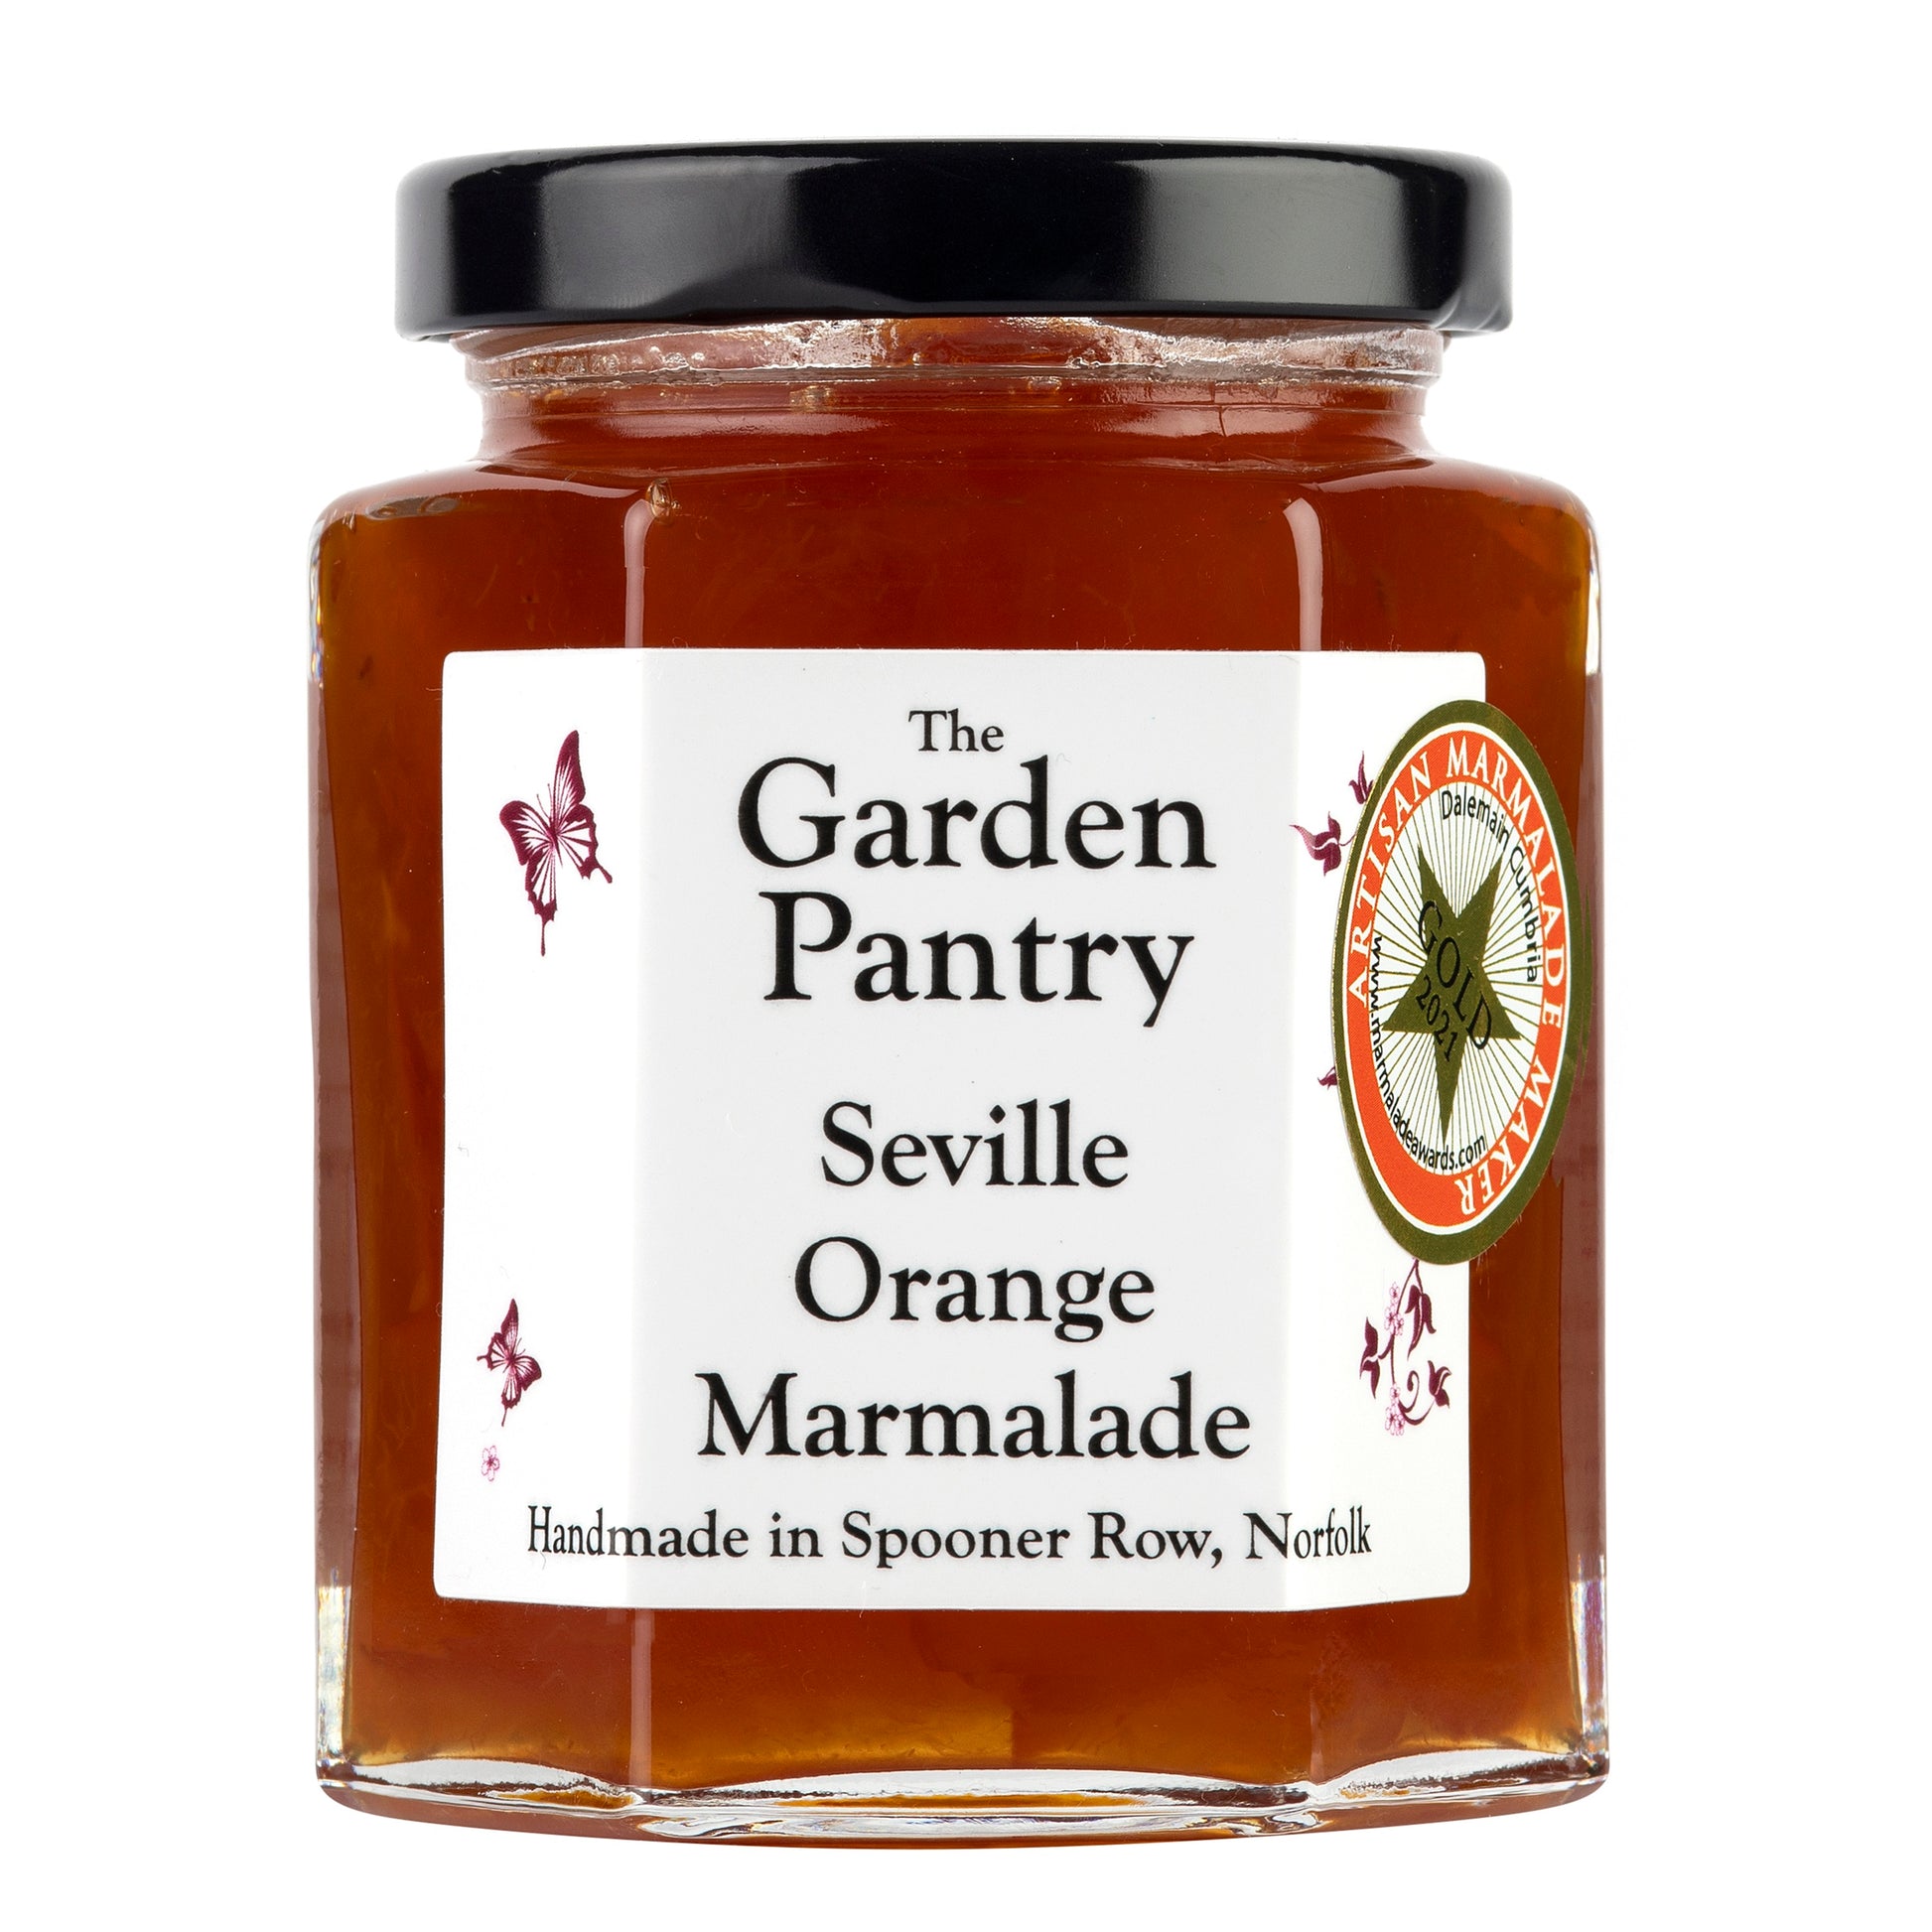 image shows a glass jar of seville orange marmalade witth a black lid.